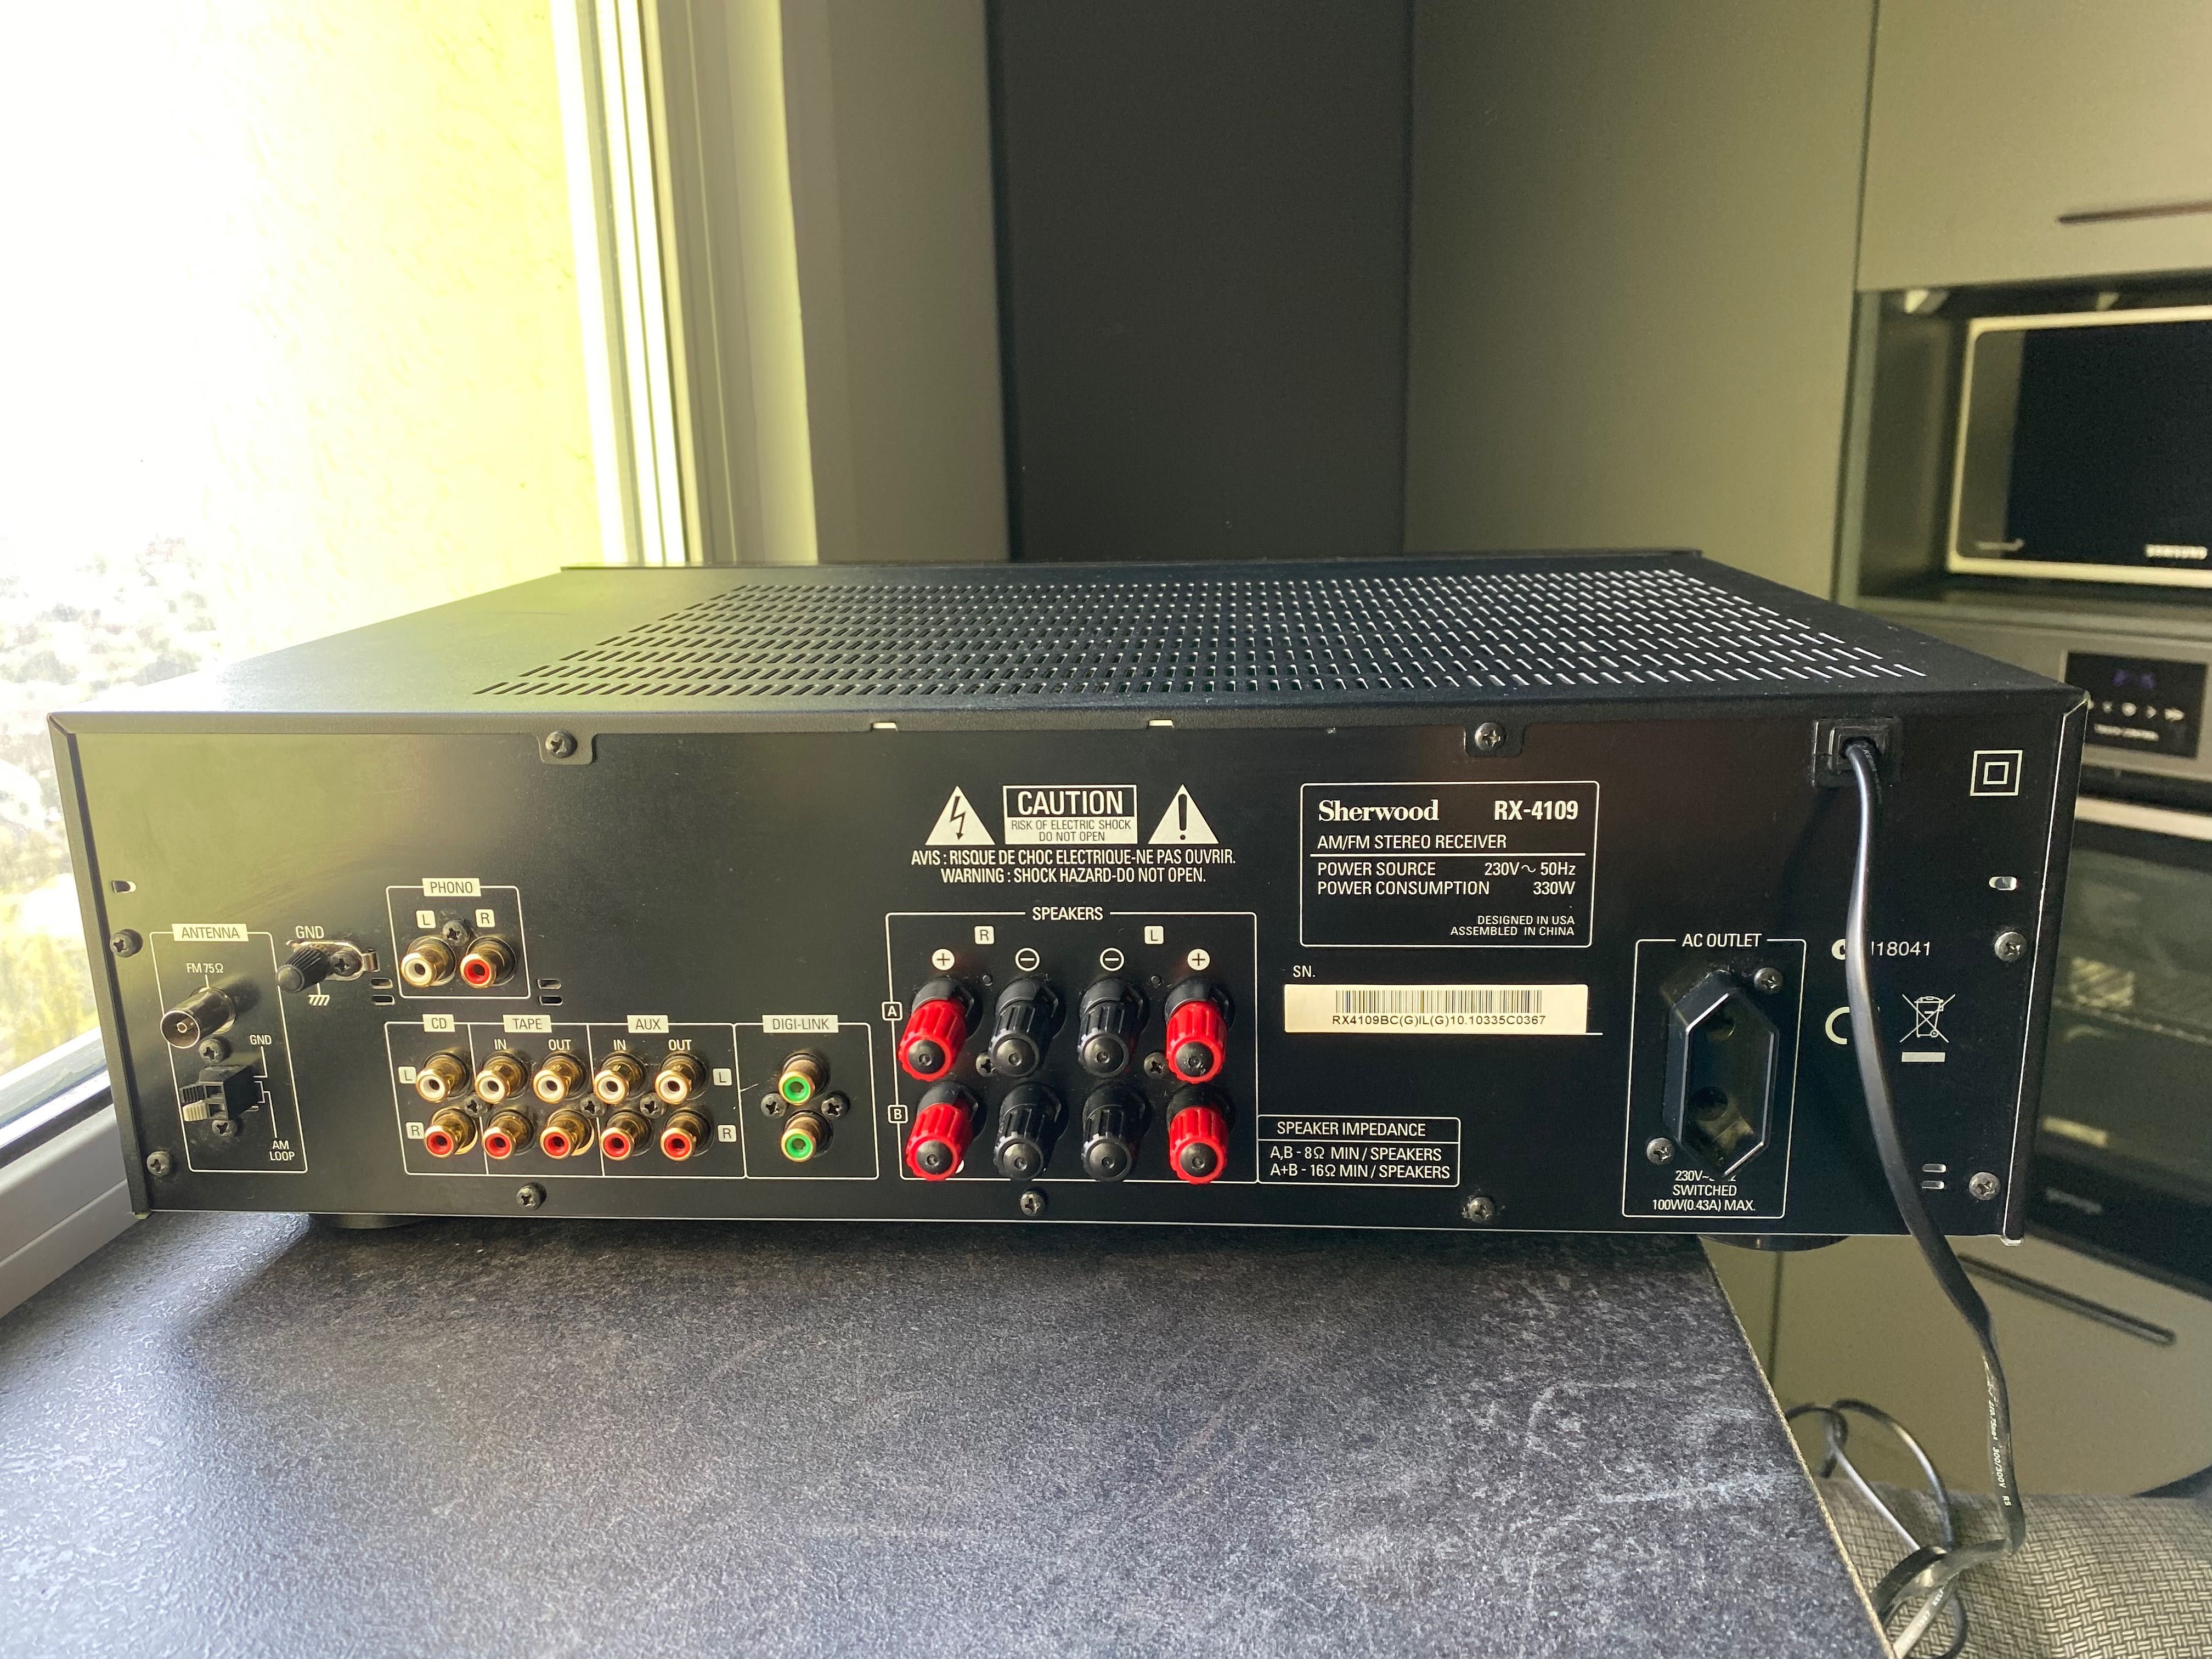 Звукоусилитель Sherwood stereo receiver rx-4109